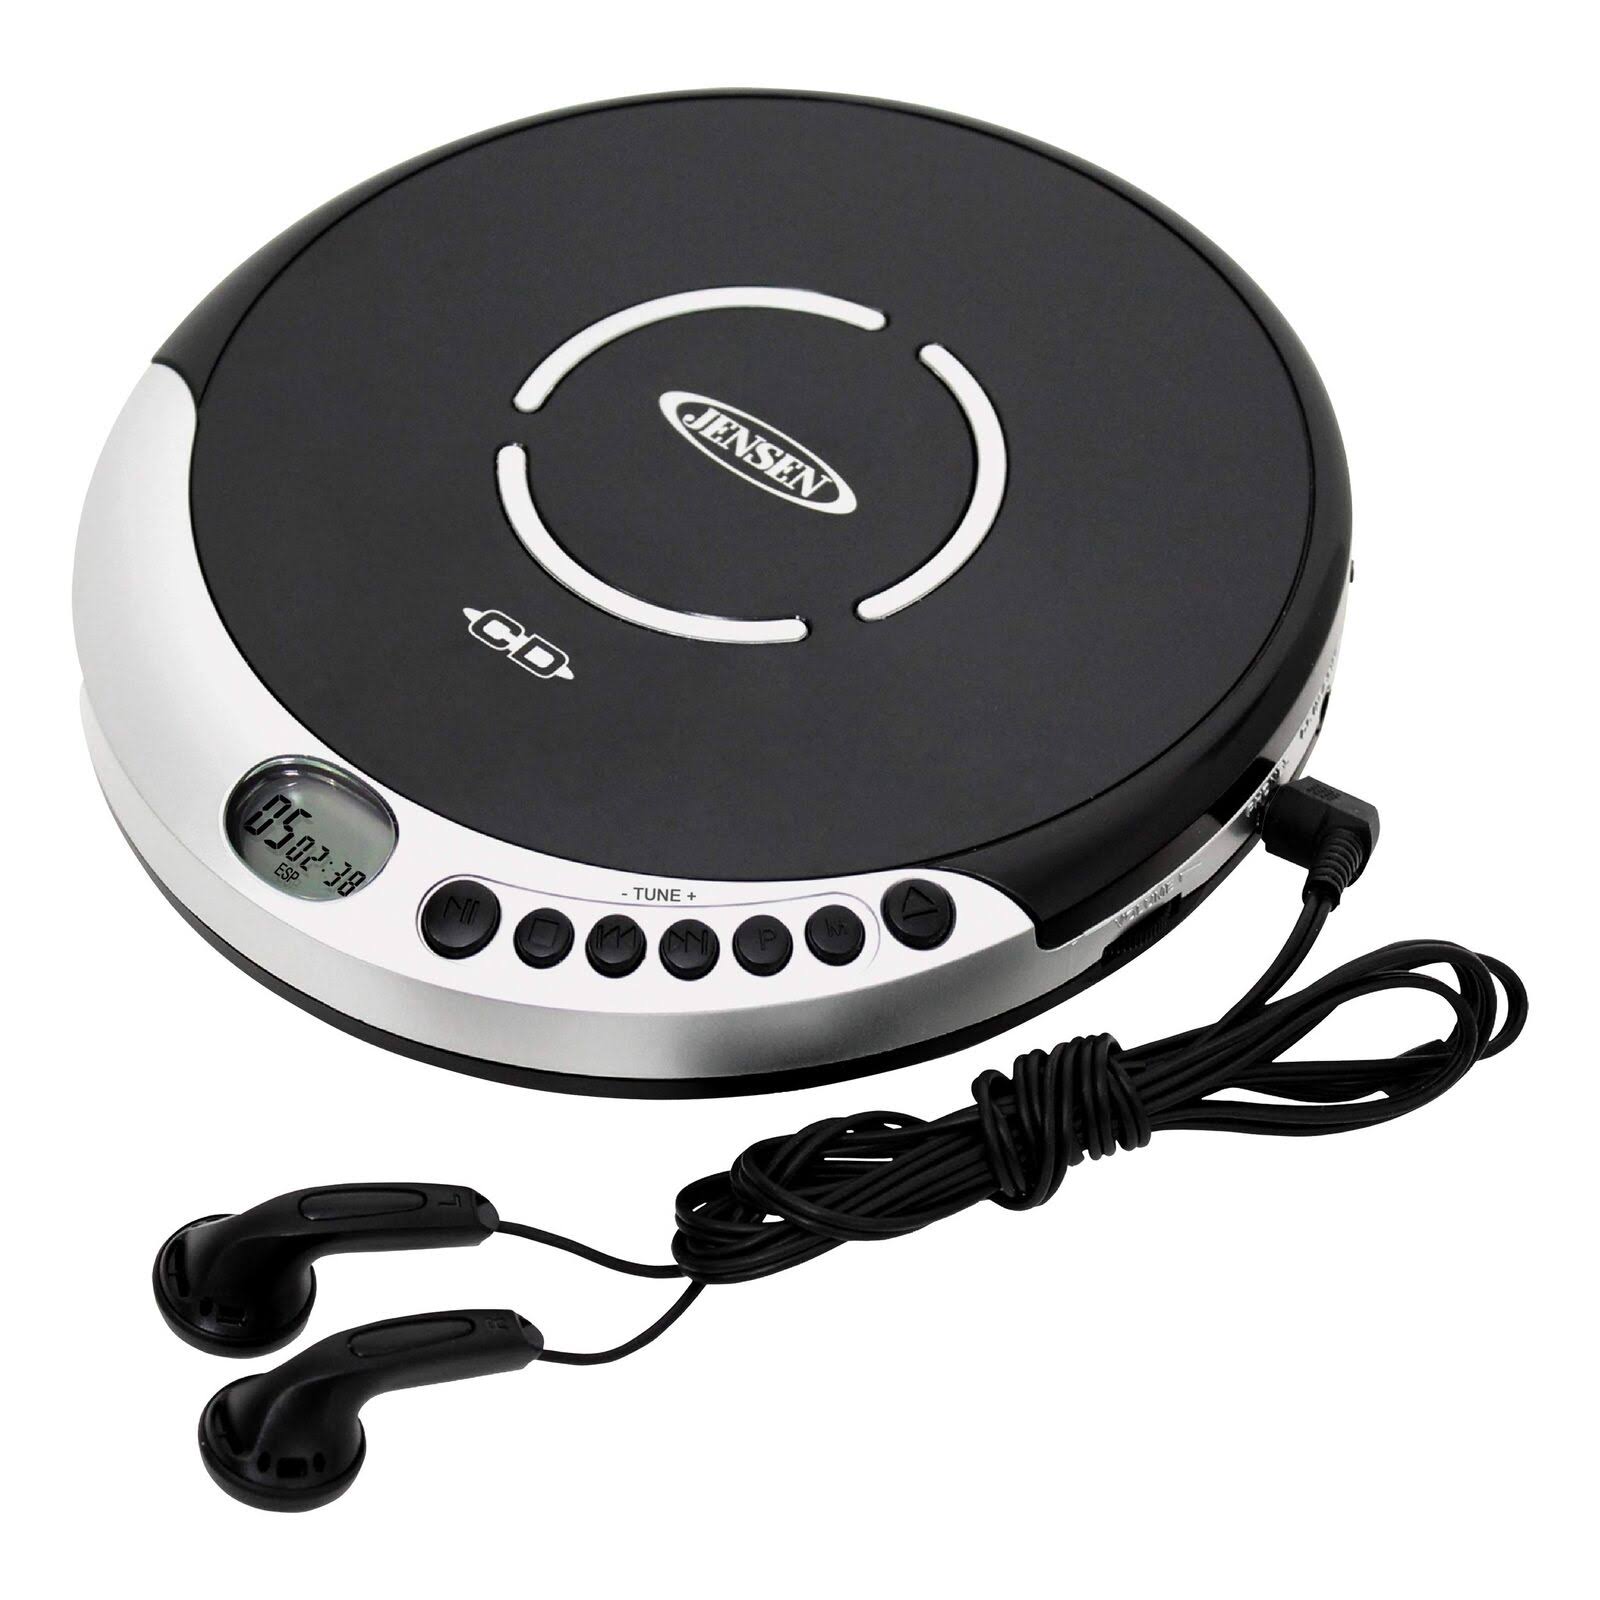 Jensen CD-60R Personal CD Player - 60 Second Anti-Skip - FM Radio (Silver/ Black)